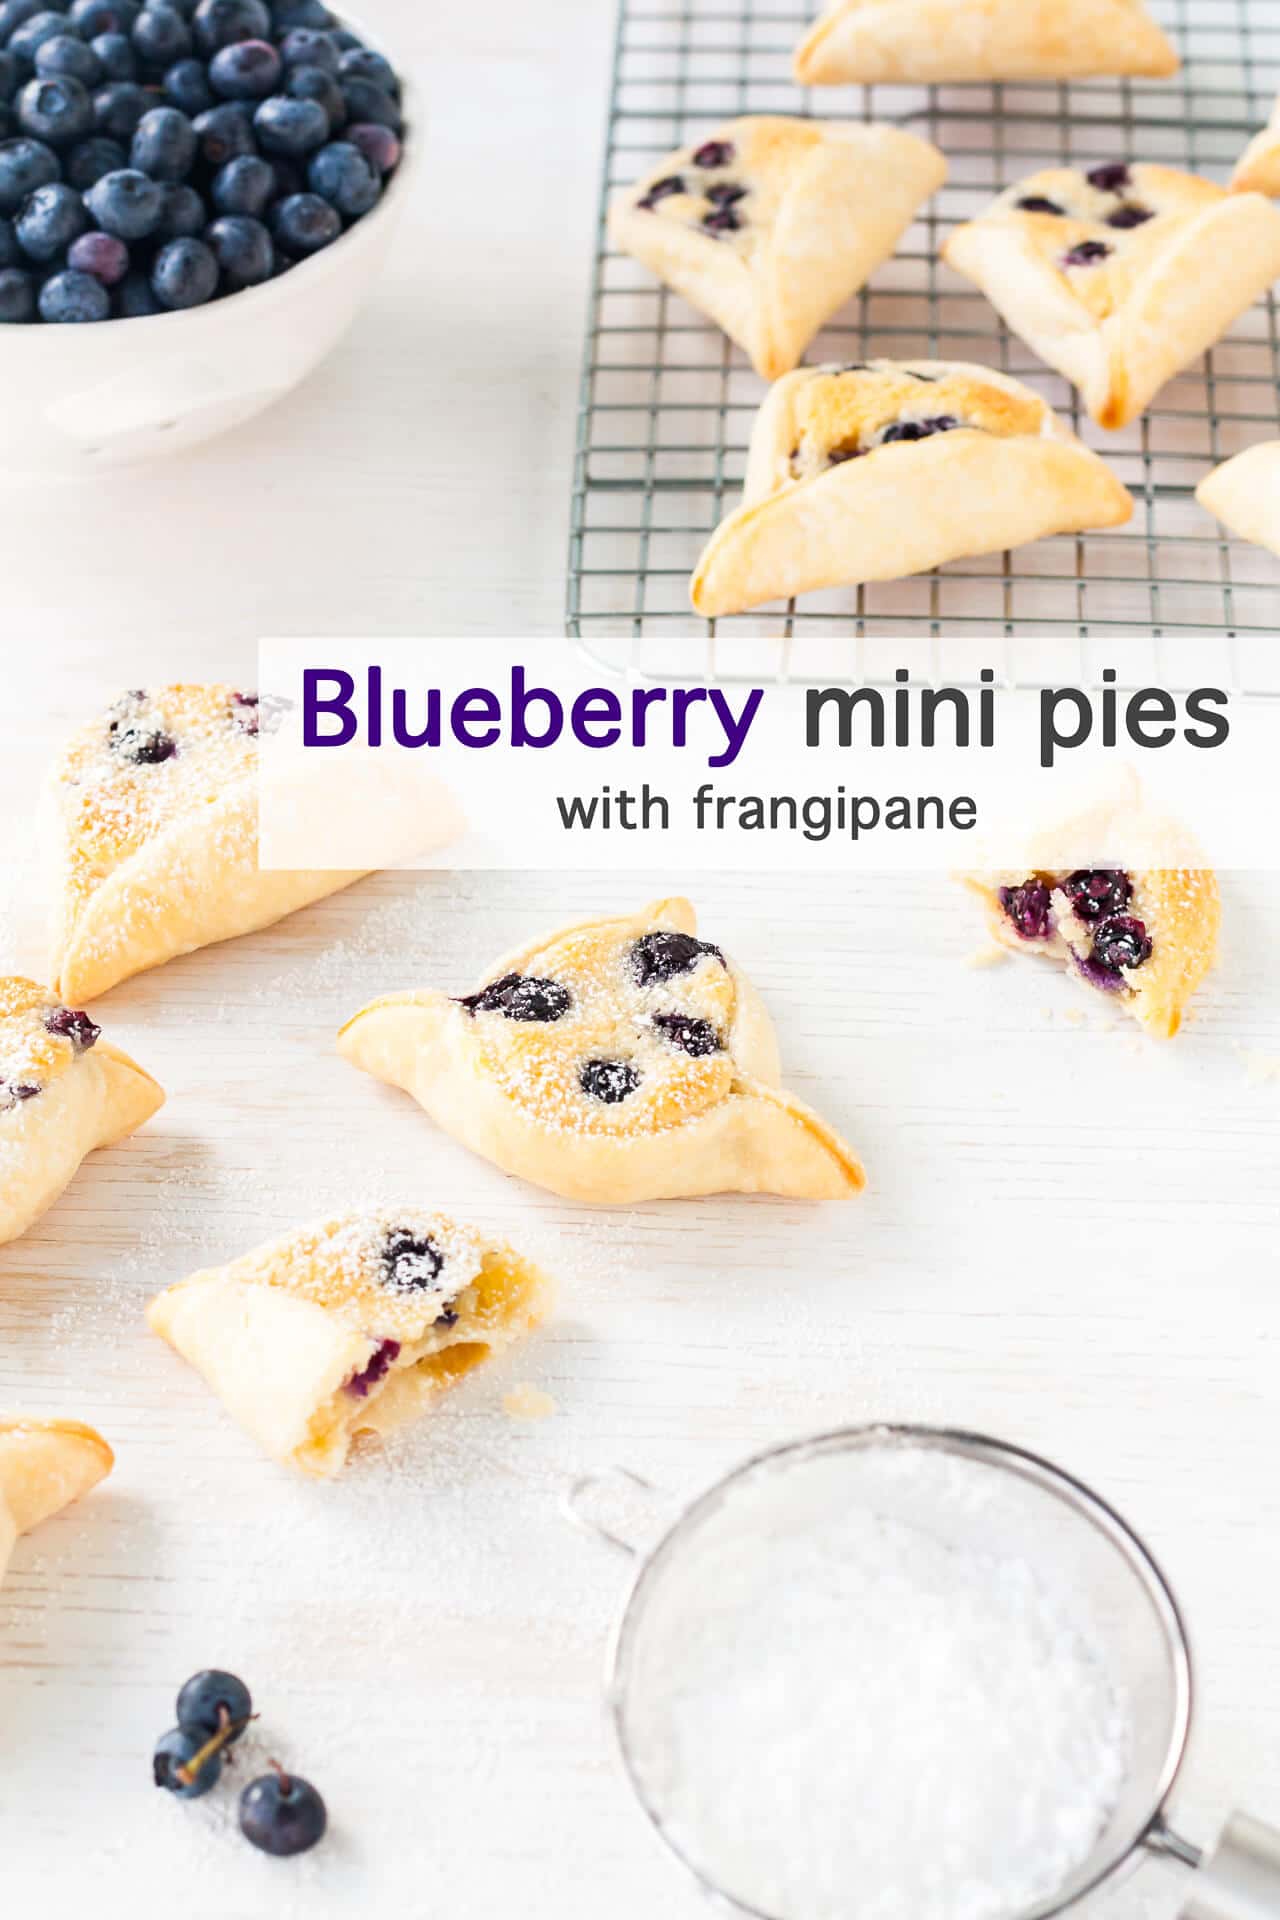 Blueberry mini pies with frangipane, triangle shaped mini pies